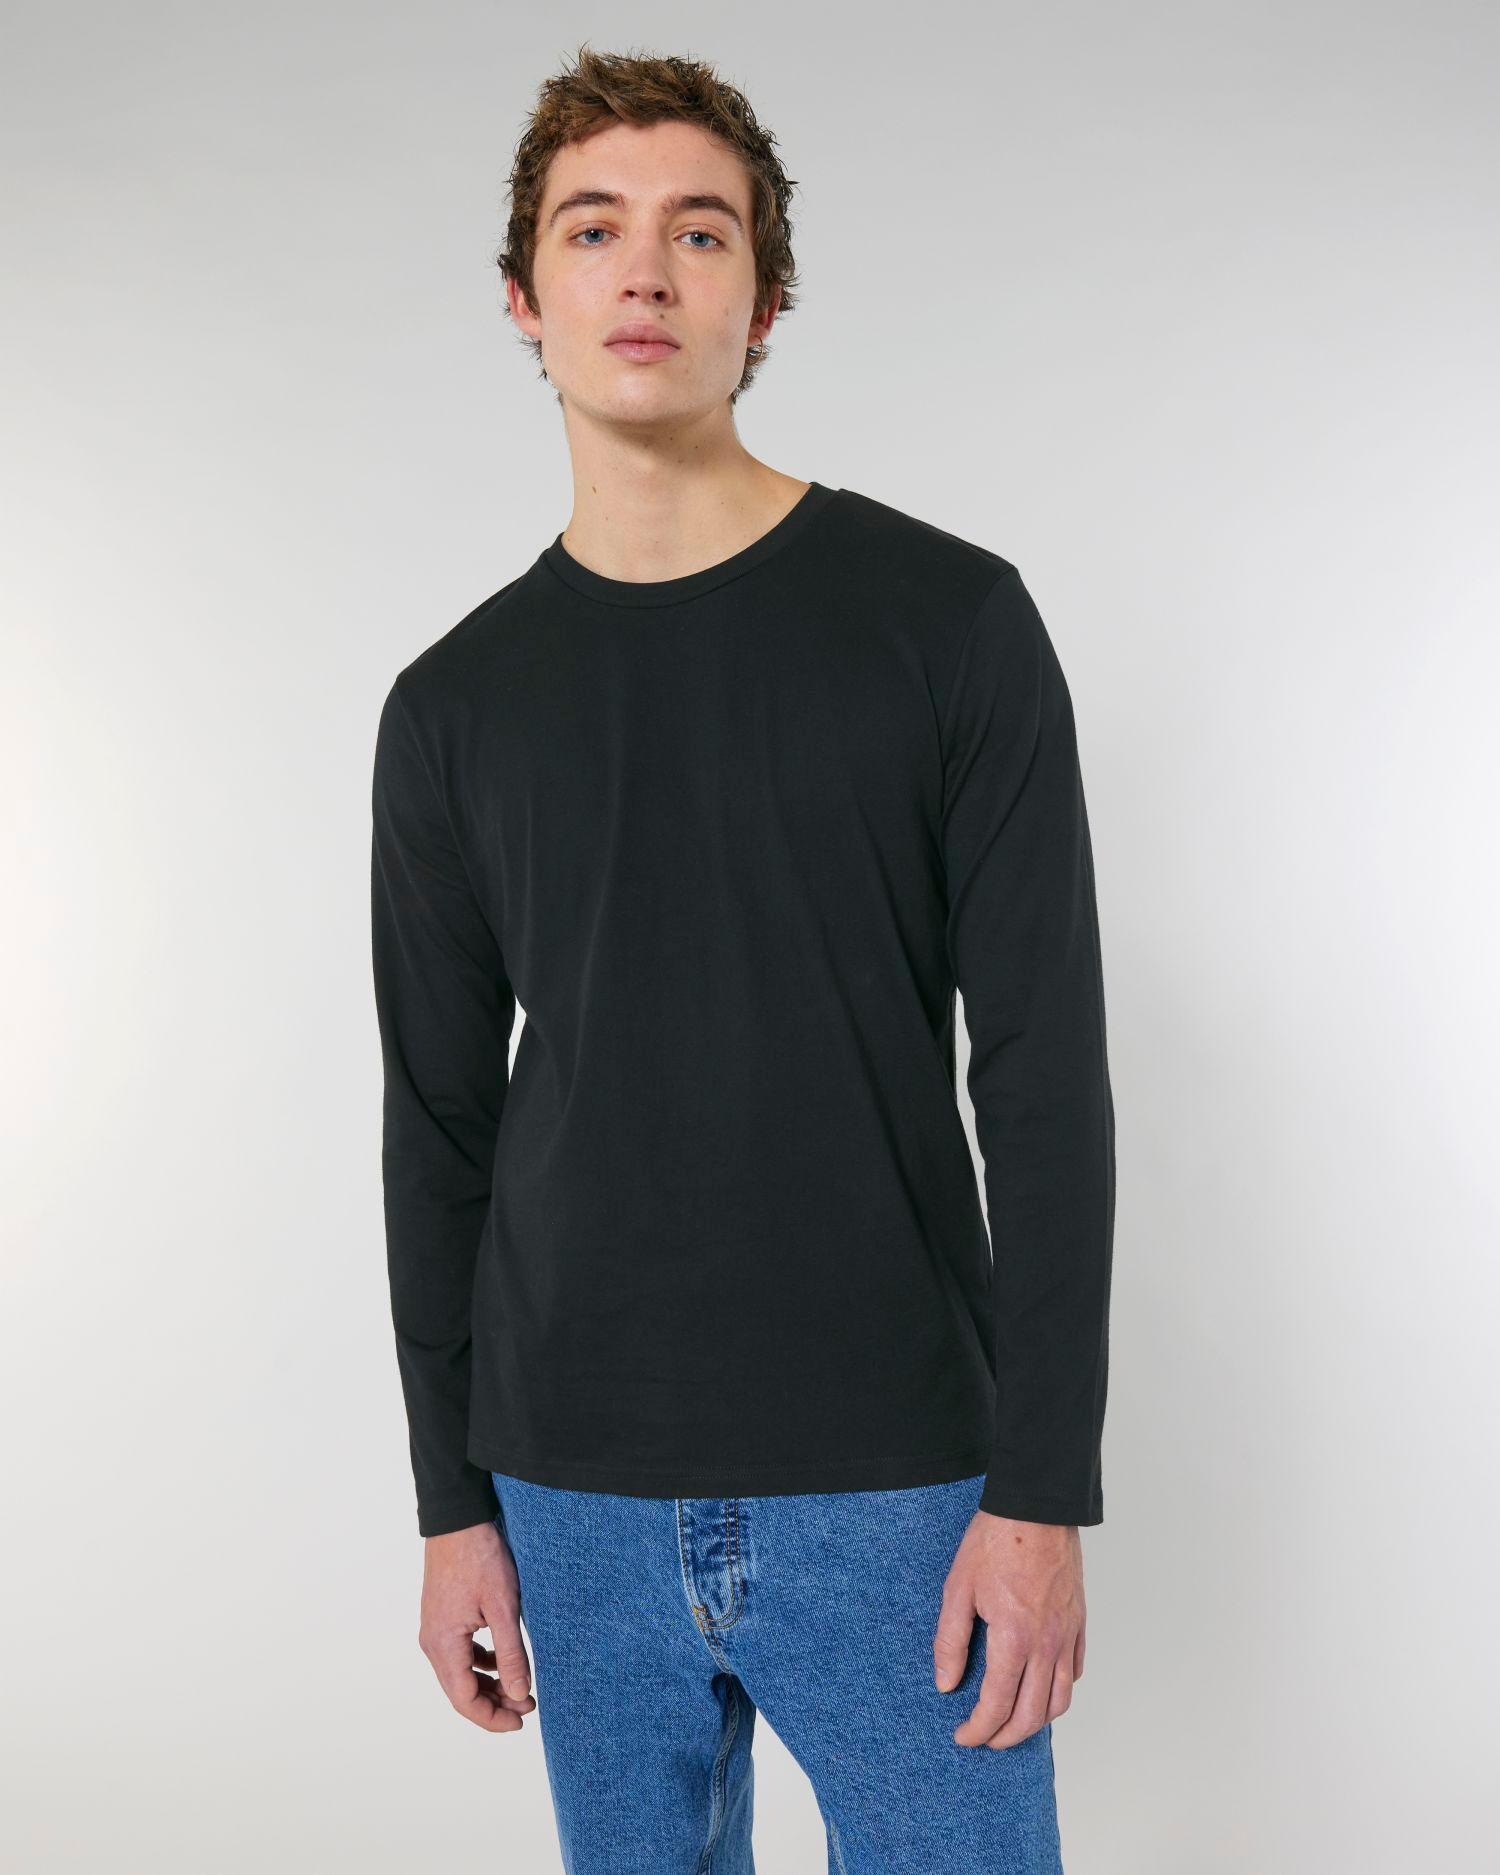 Tee-Shirt Homme Manches Longues | 100% Coton Bio | Stanley Shuffler Black Heather Blue